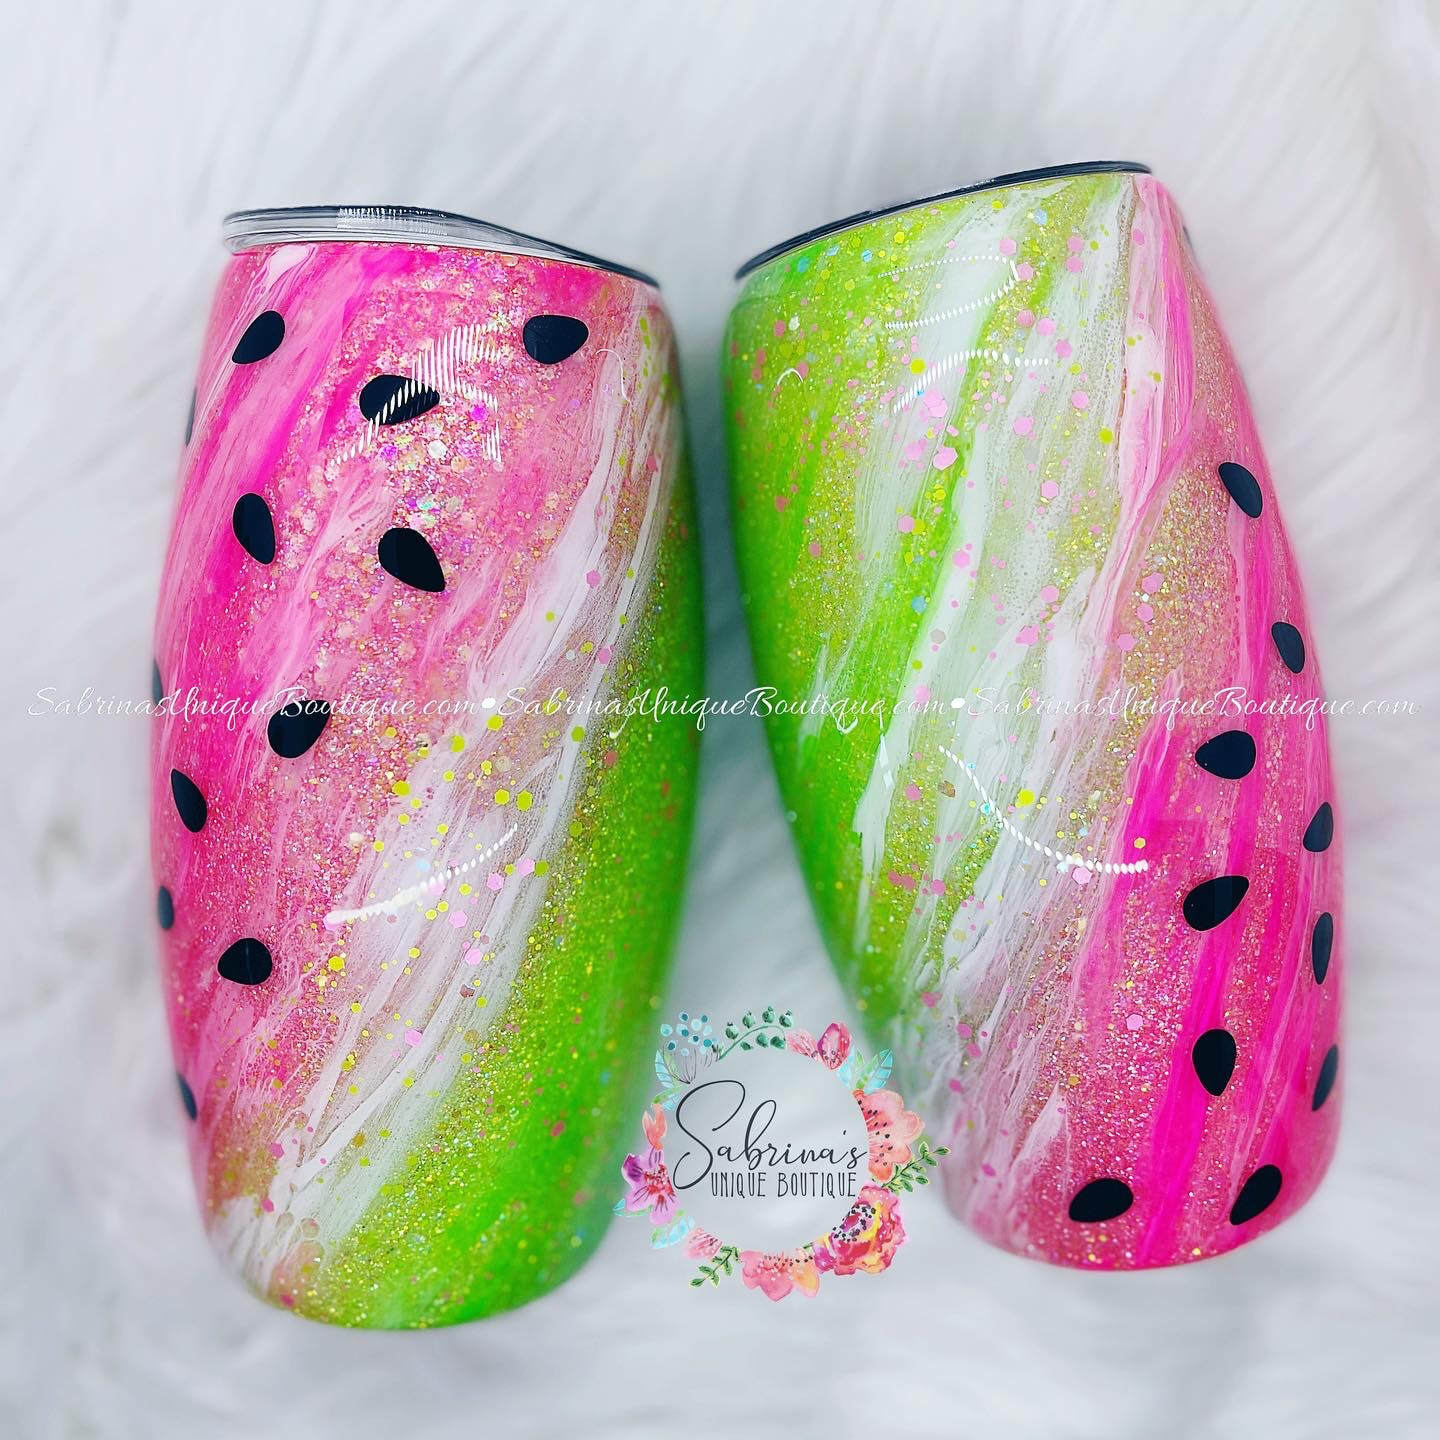 Watermelon Sugar Nails, Pink Sparkly Glitter Nails